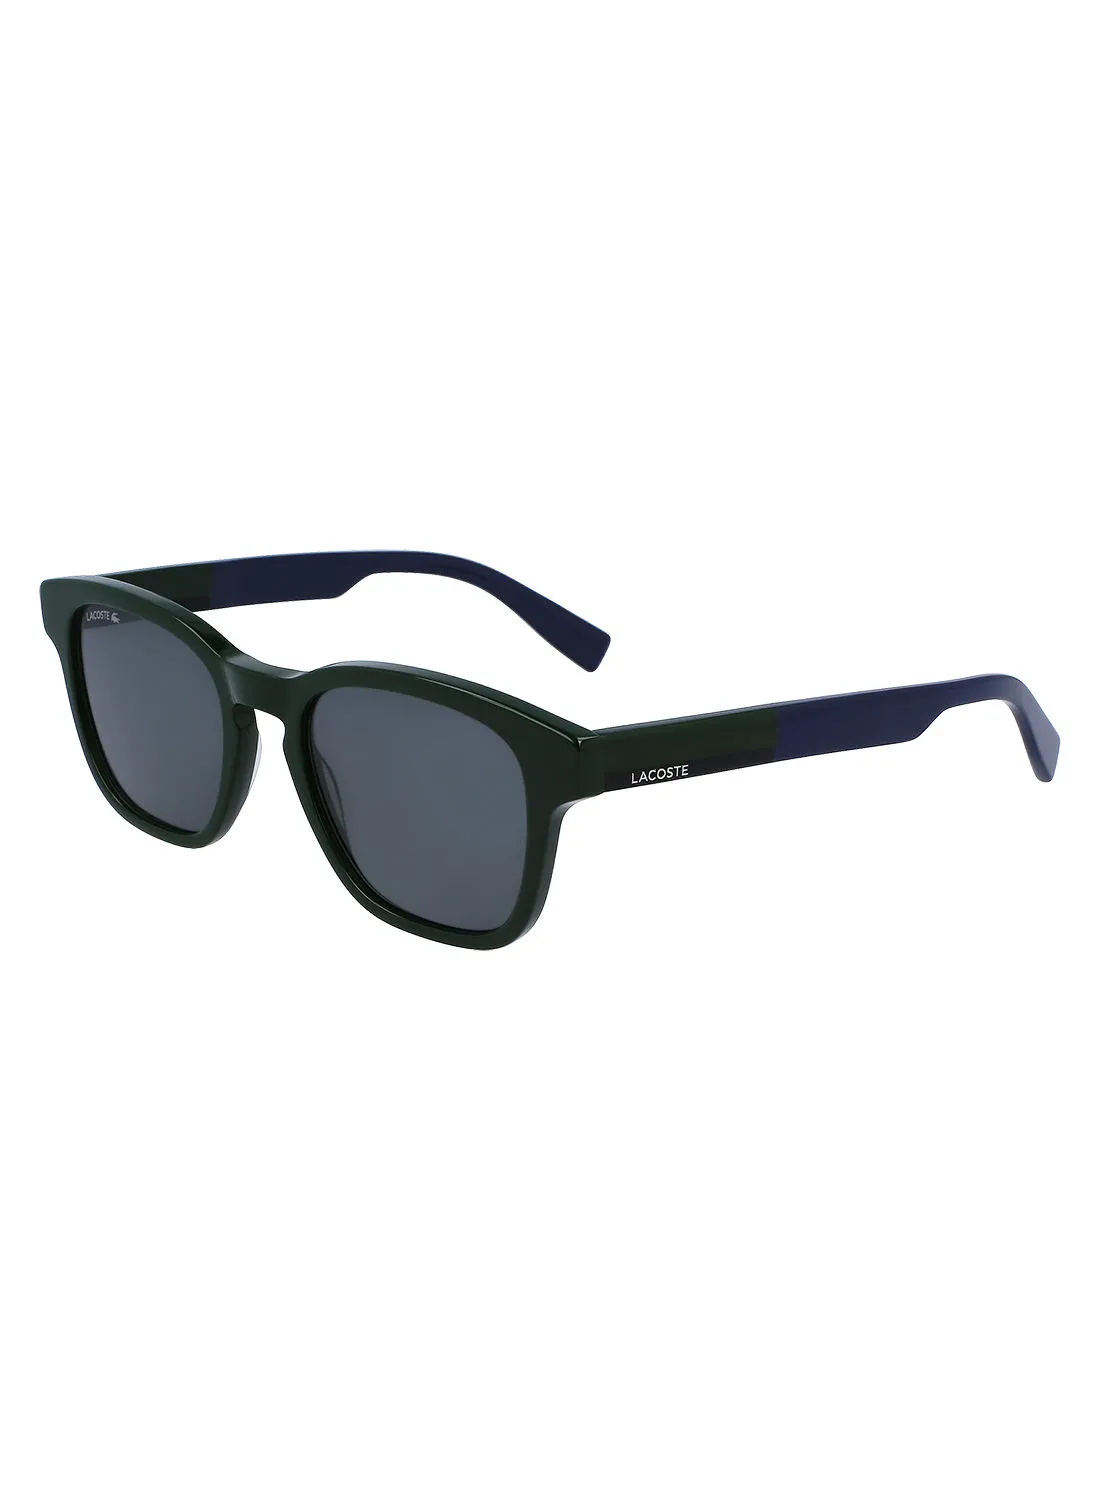 LACOSTE Full Rim Acetate Rectangle Sunglasses L986S 5220 (300) Green